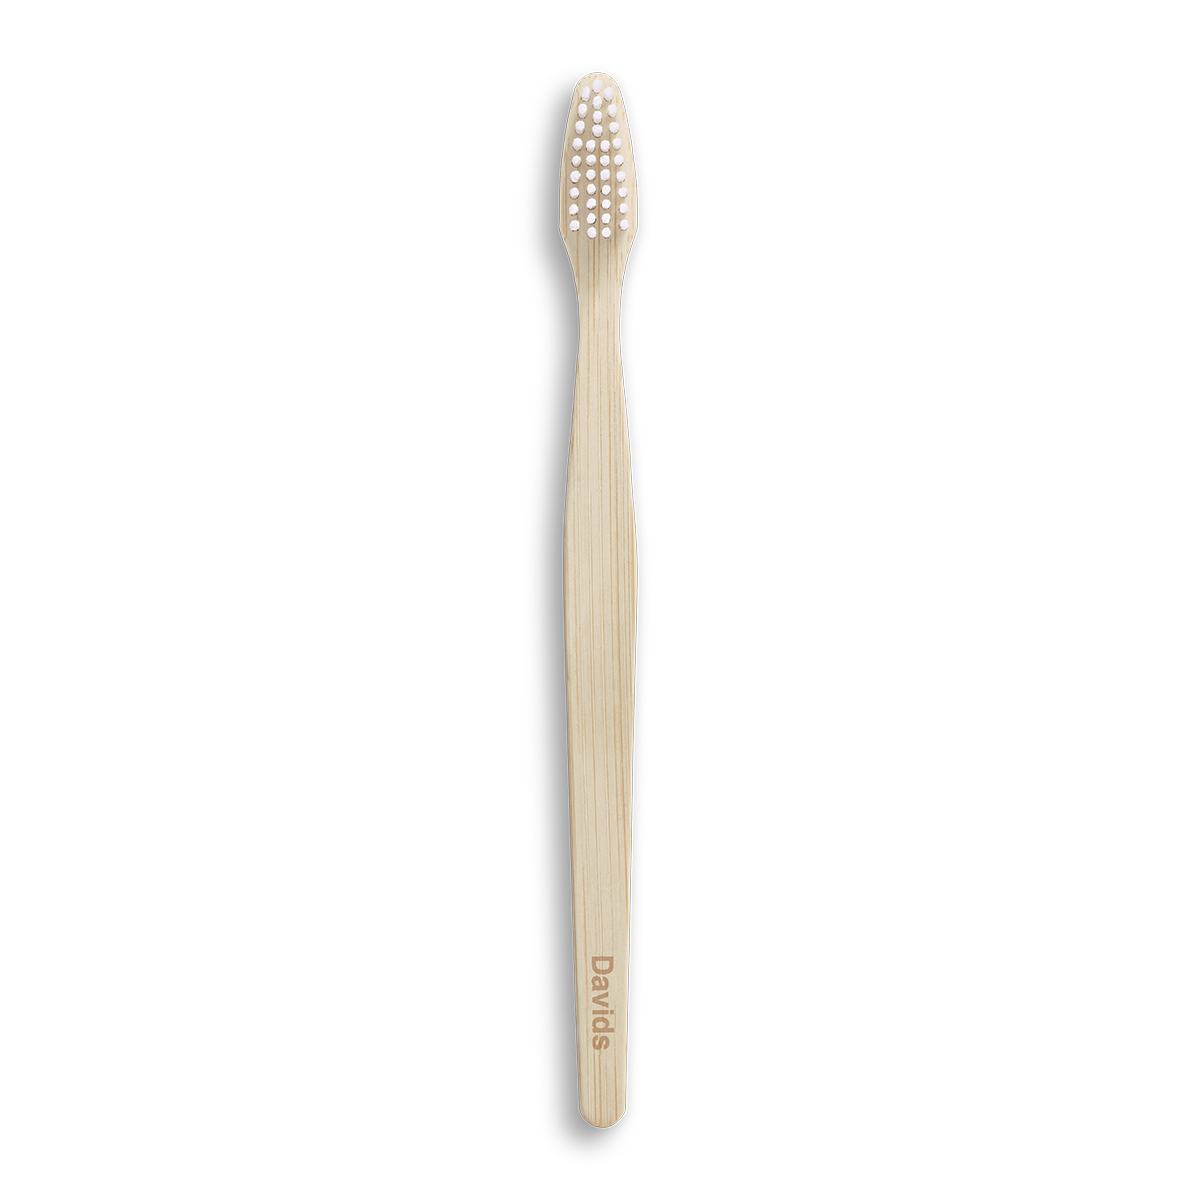 Davids premium bamboo toothbrush / adult soft